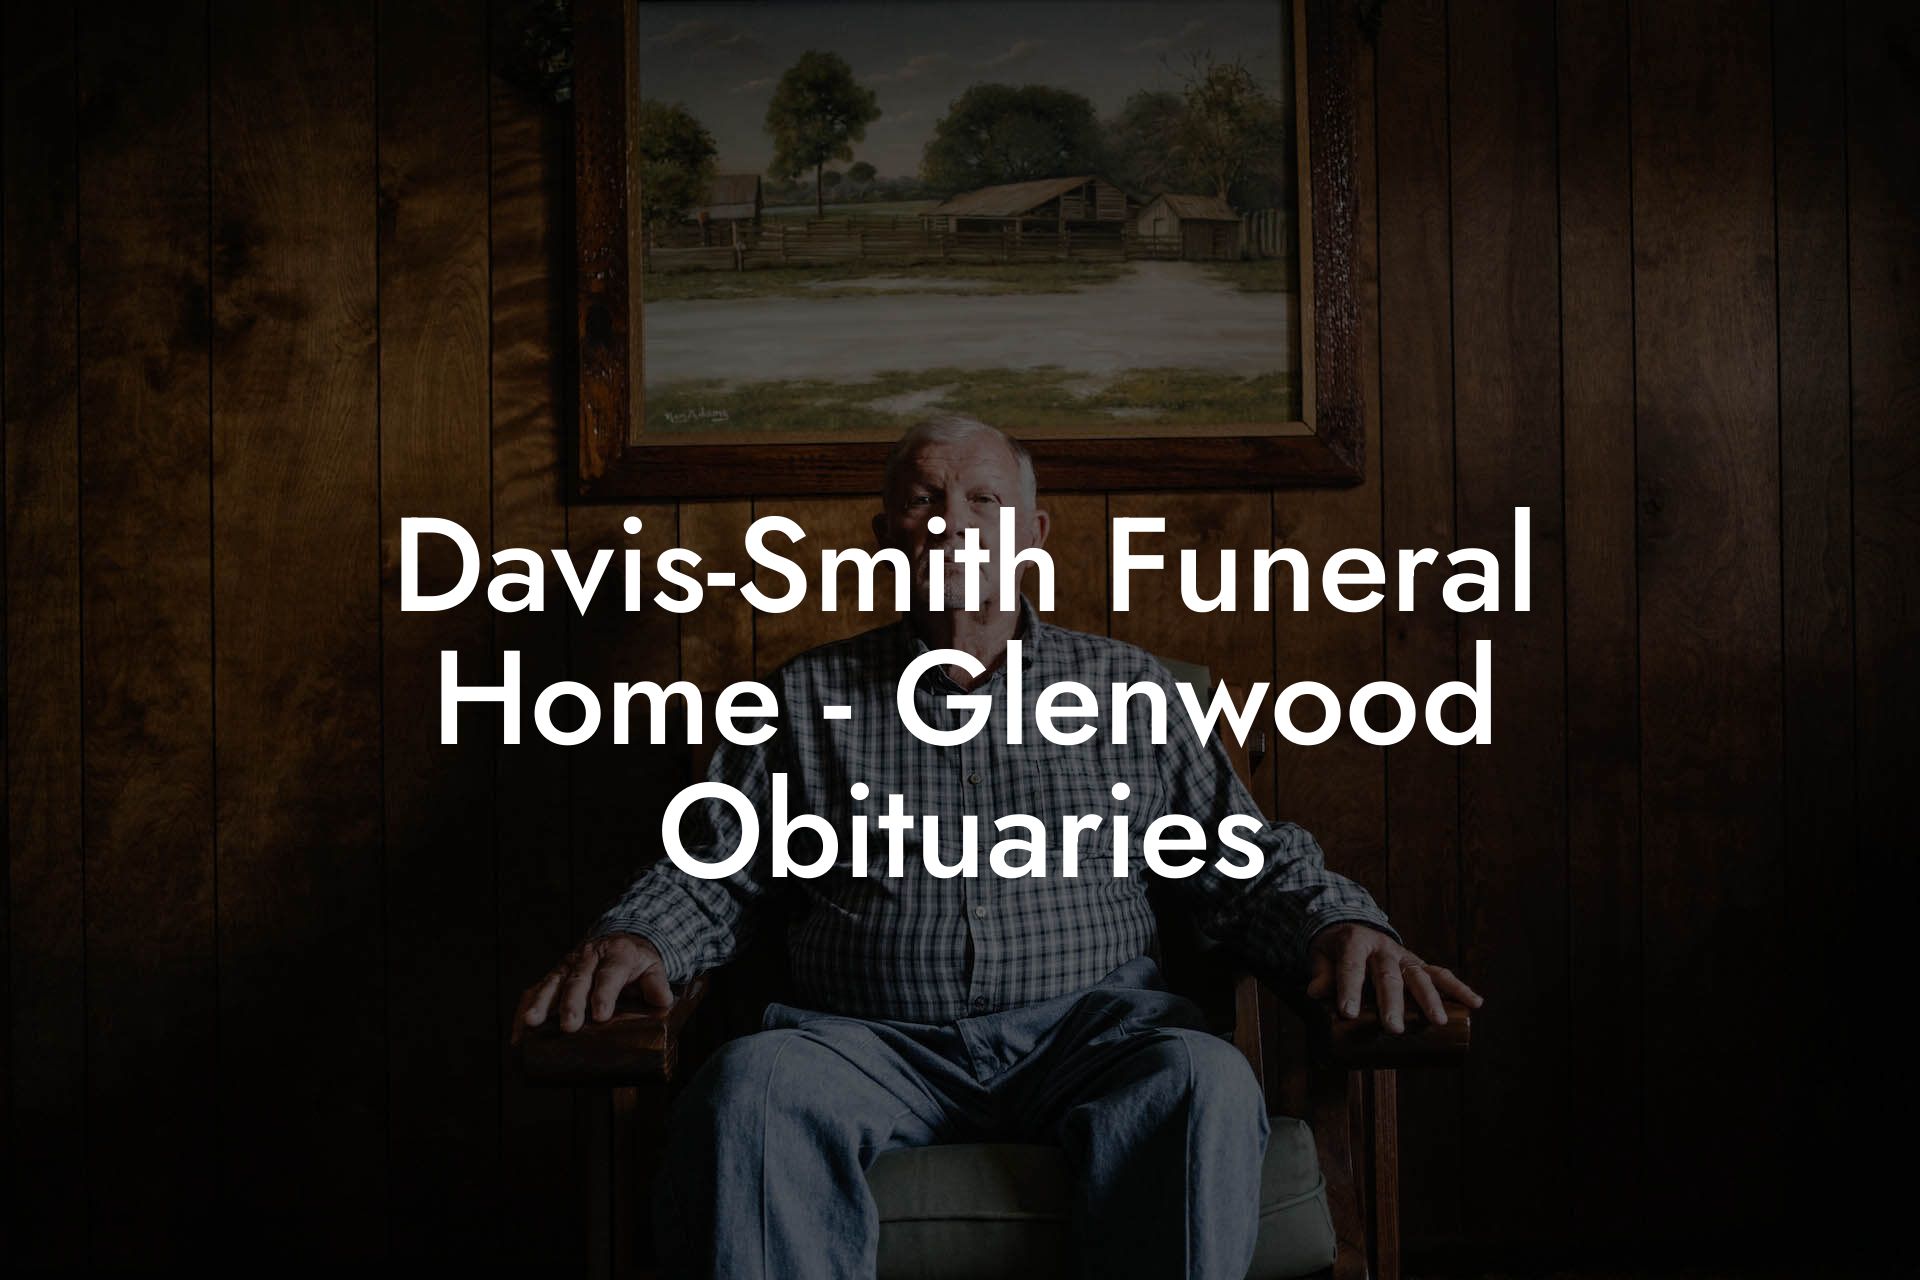 Davis-Smith Funeral Home - Glenwood Obituaries